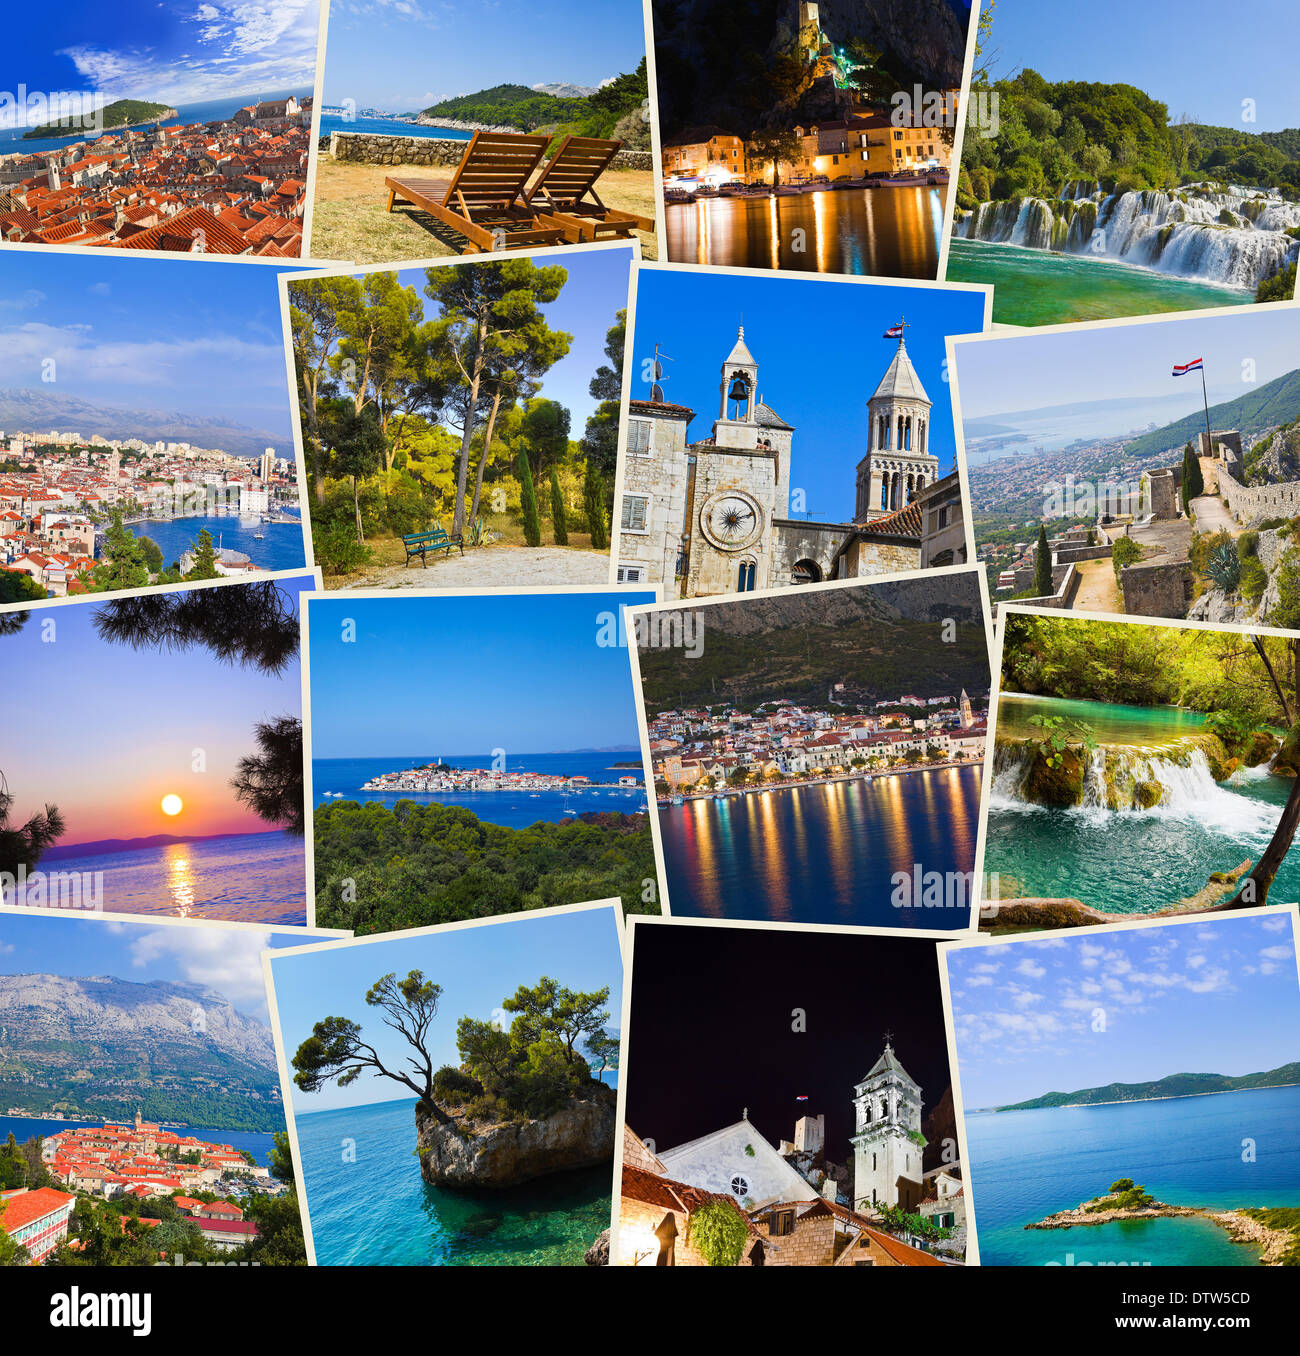 Pila de Croacia fotos de viajes Foto de stock